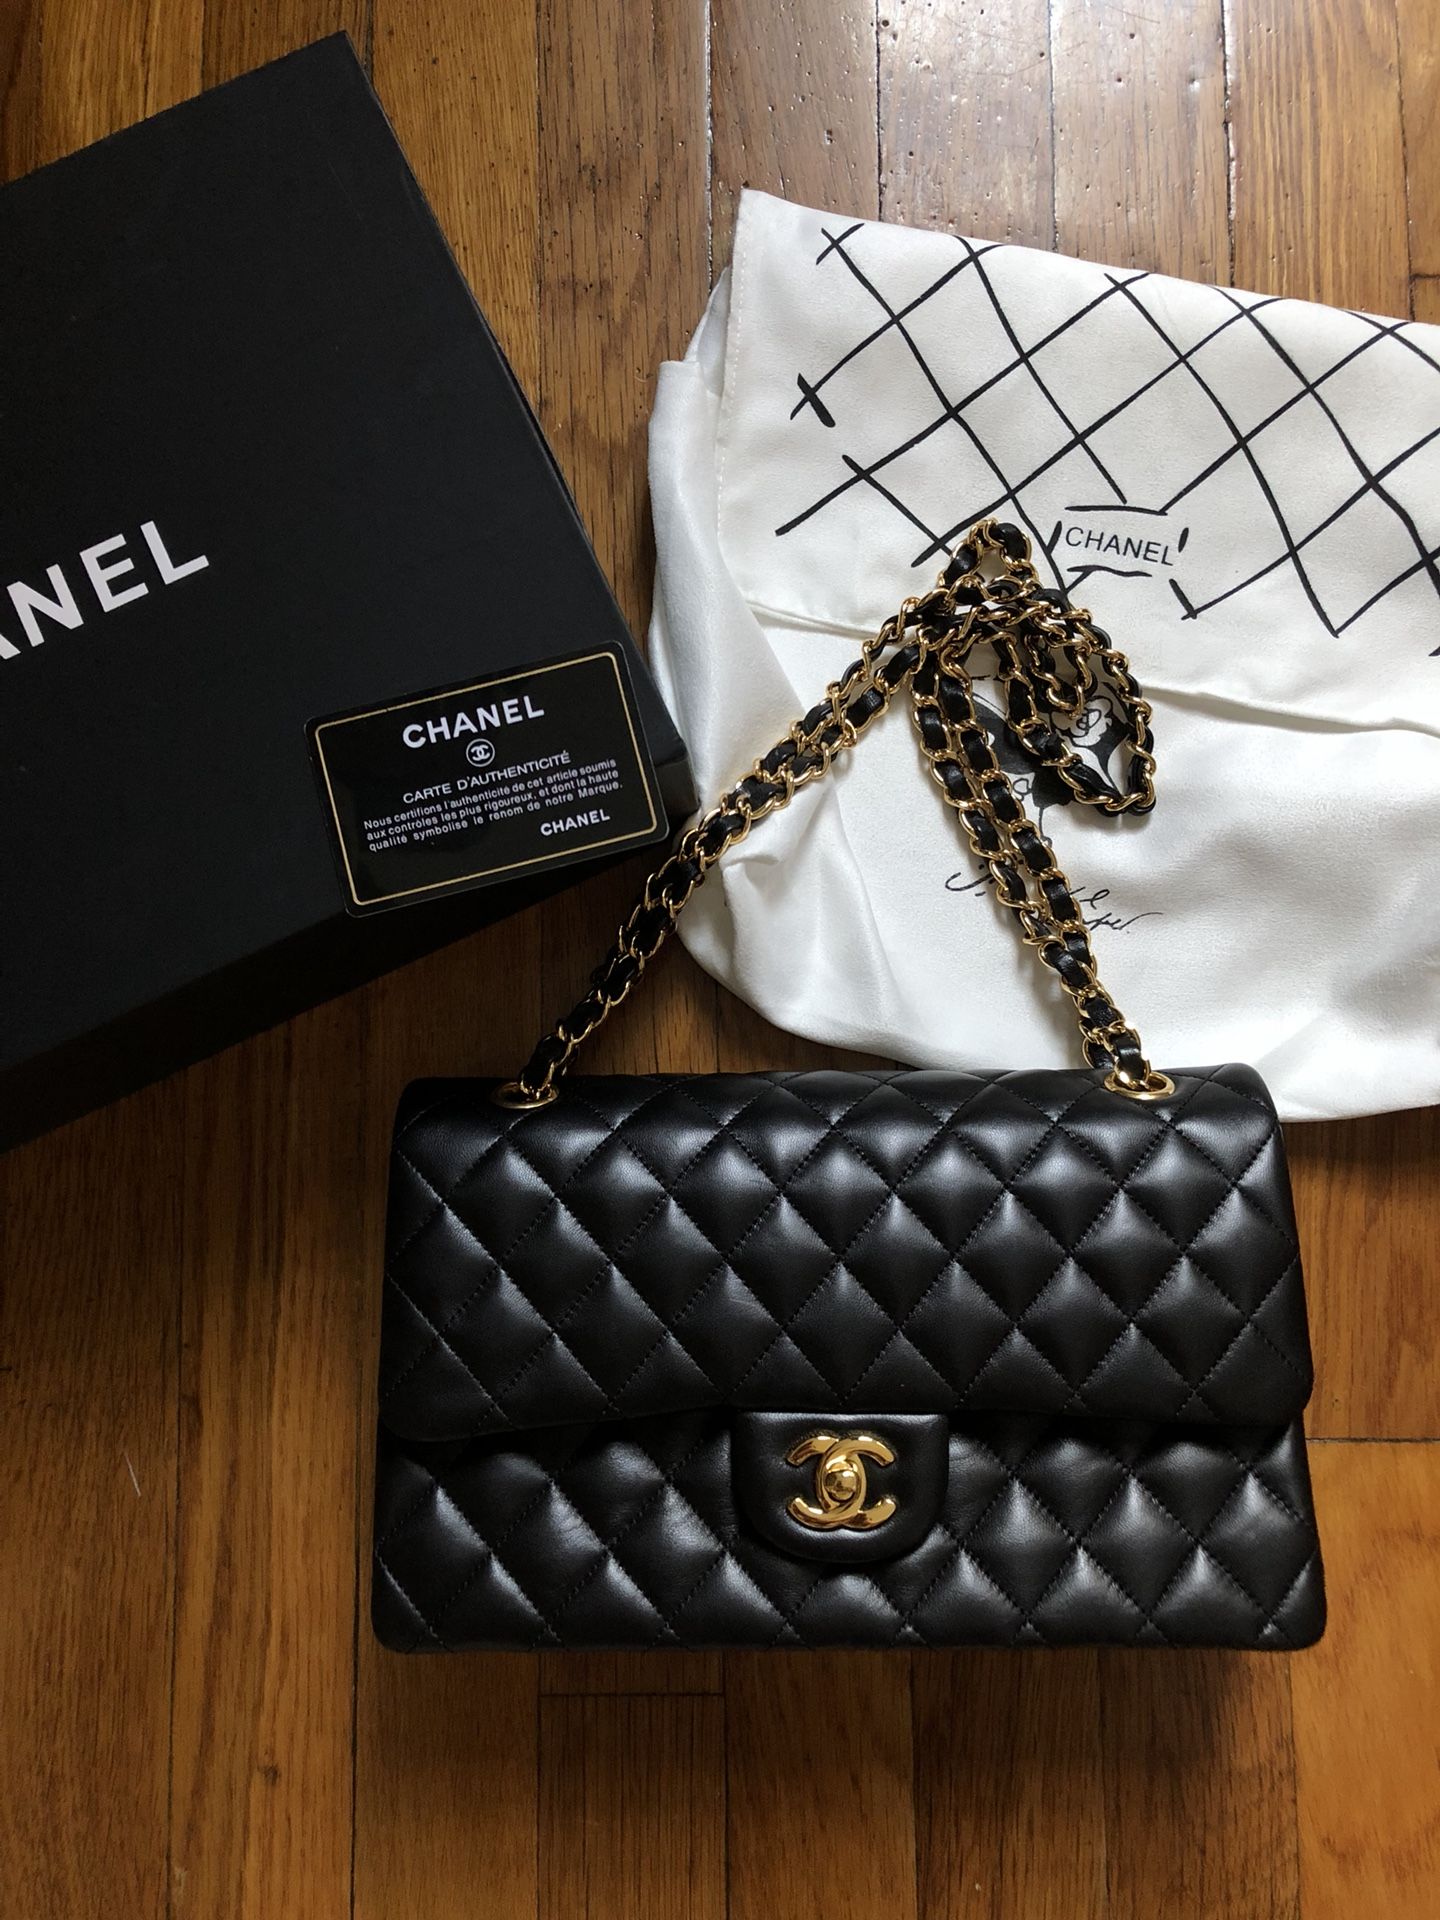 Chanel black flap bag